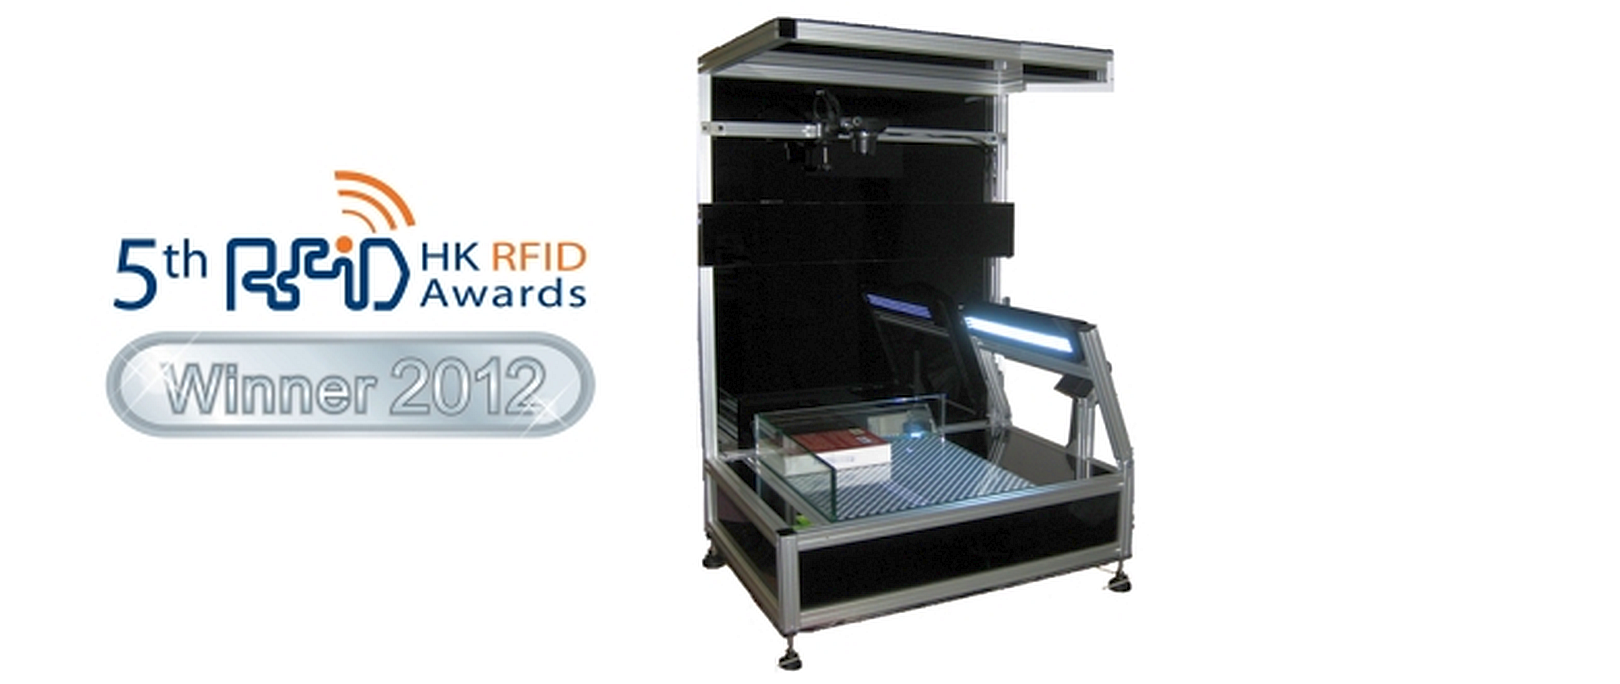 HK RFID Awards 2012